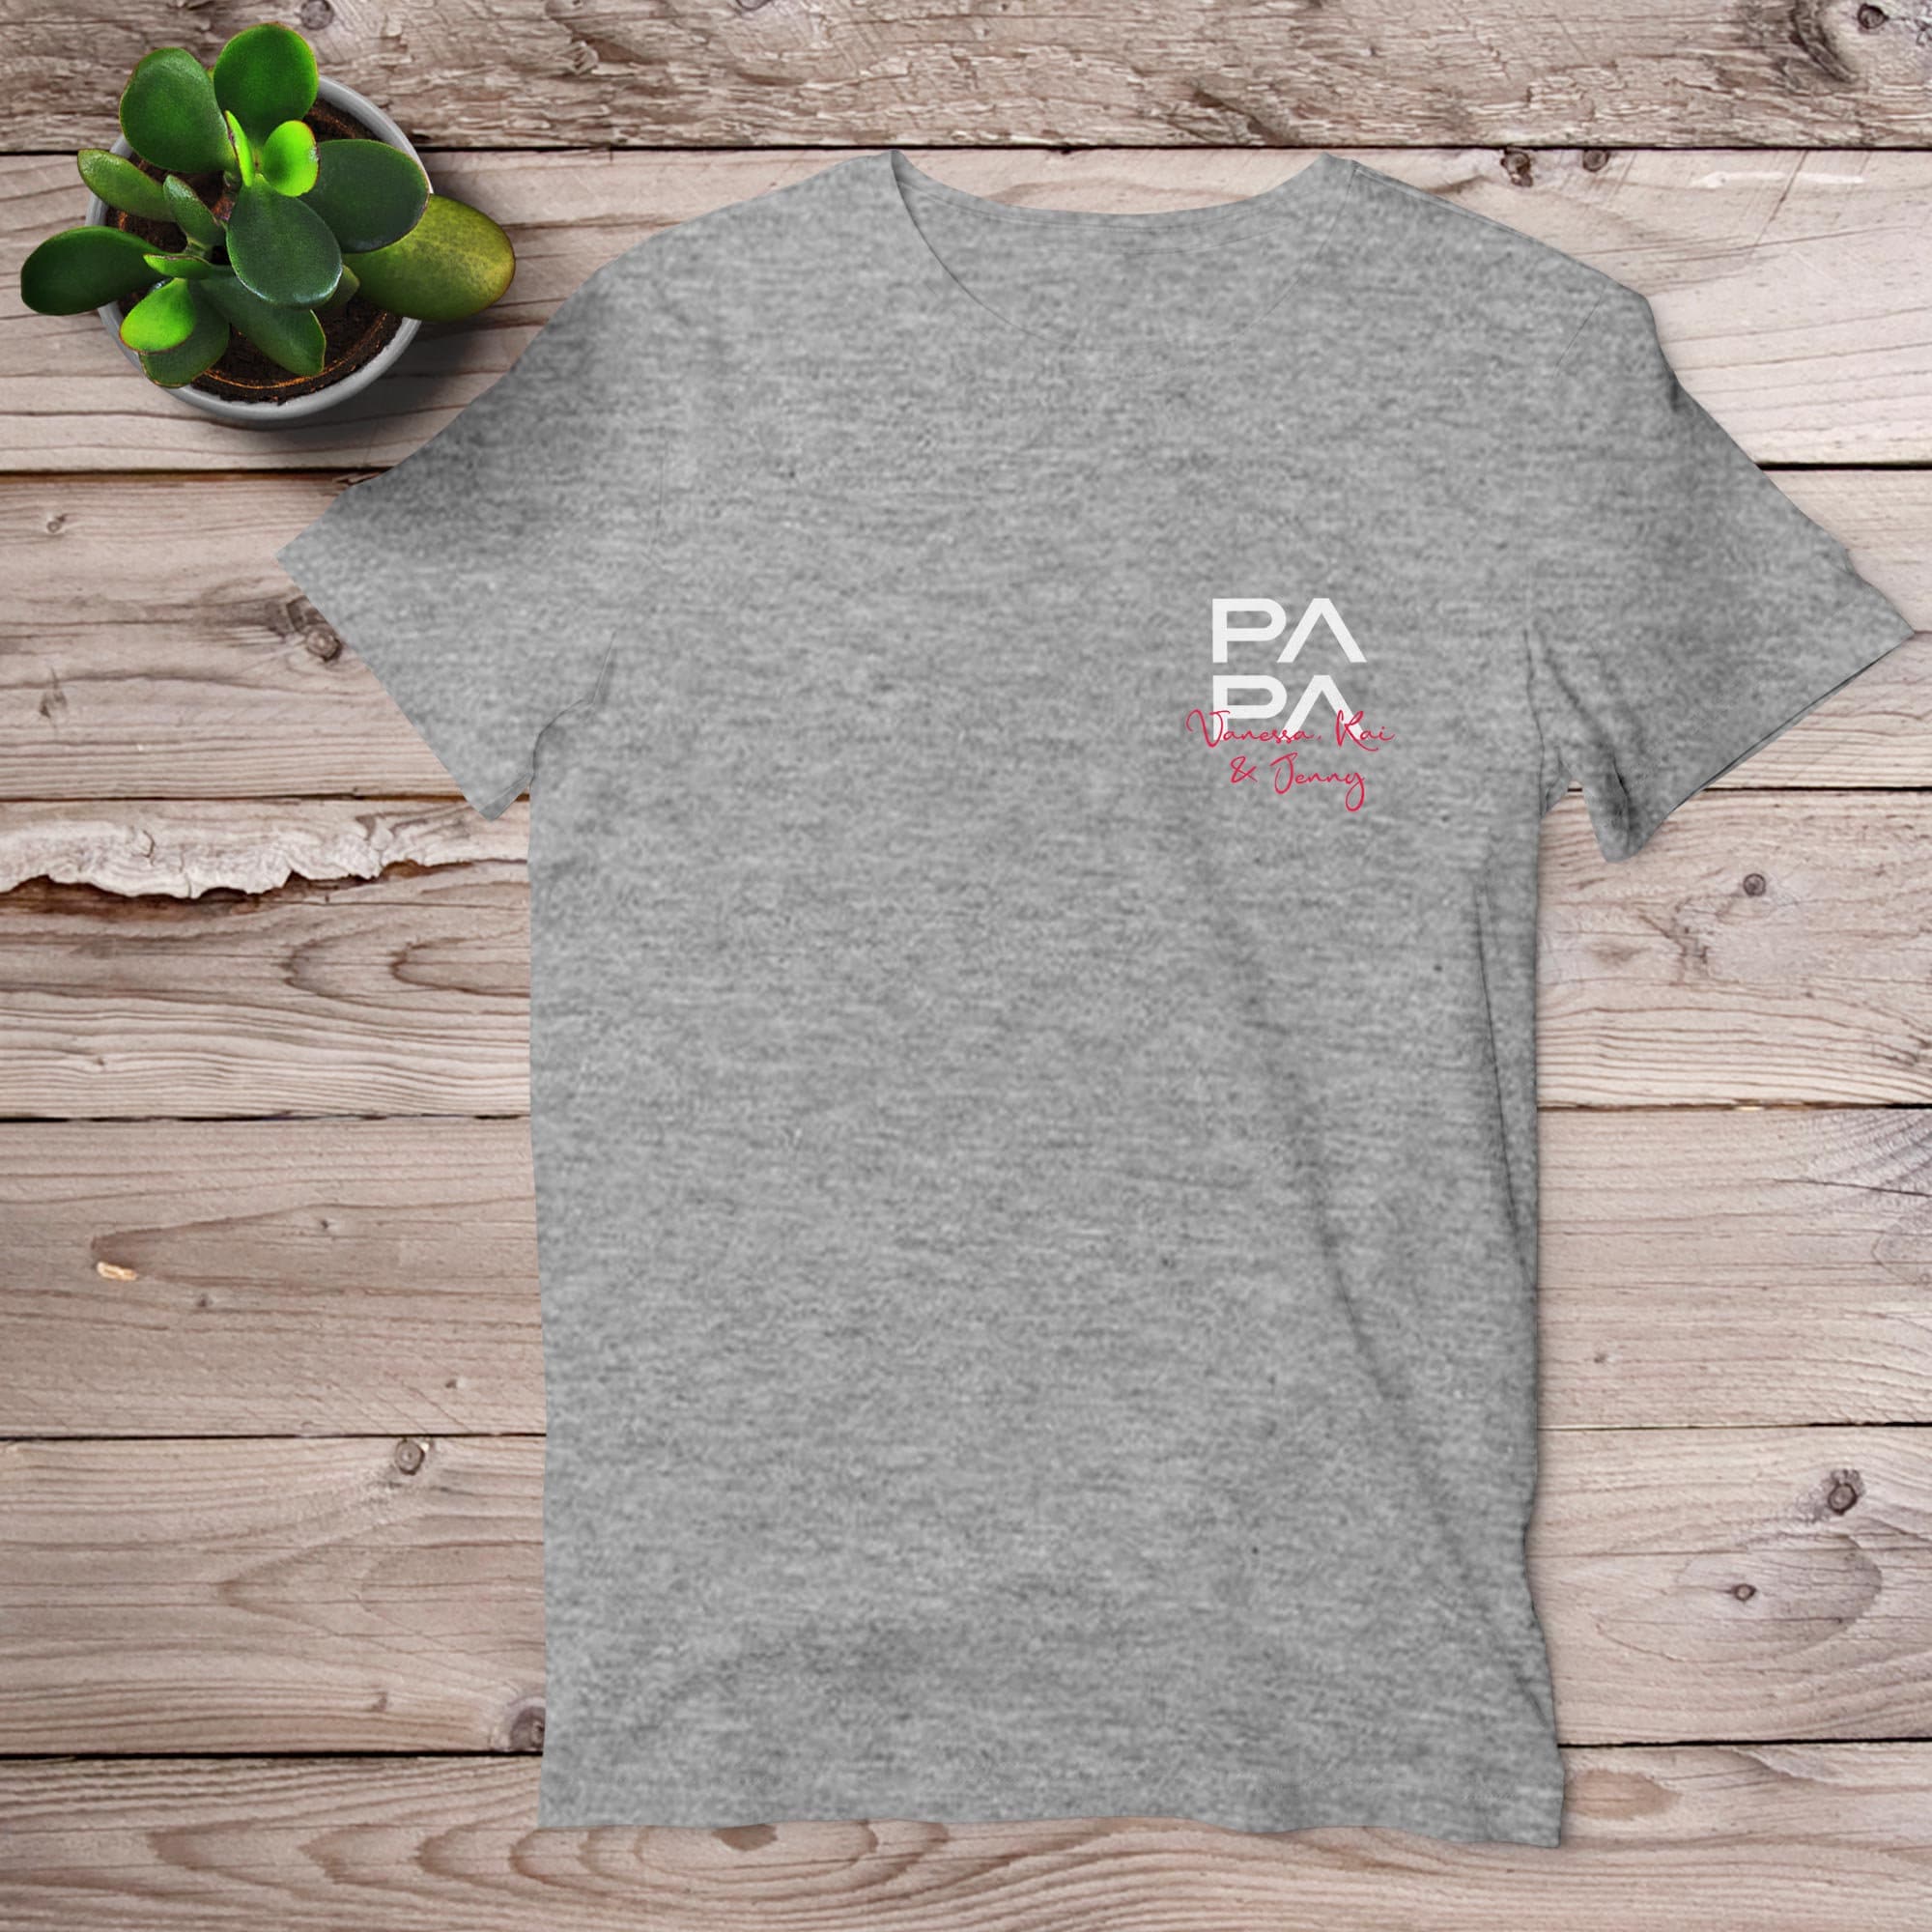 Papa T-Shirt grau, personalisiert mit Namen